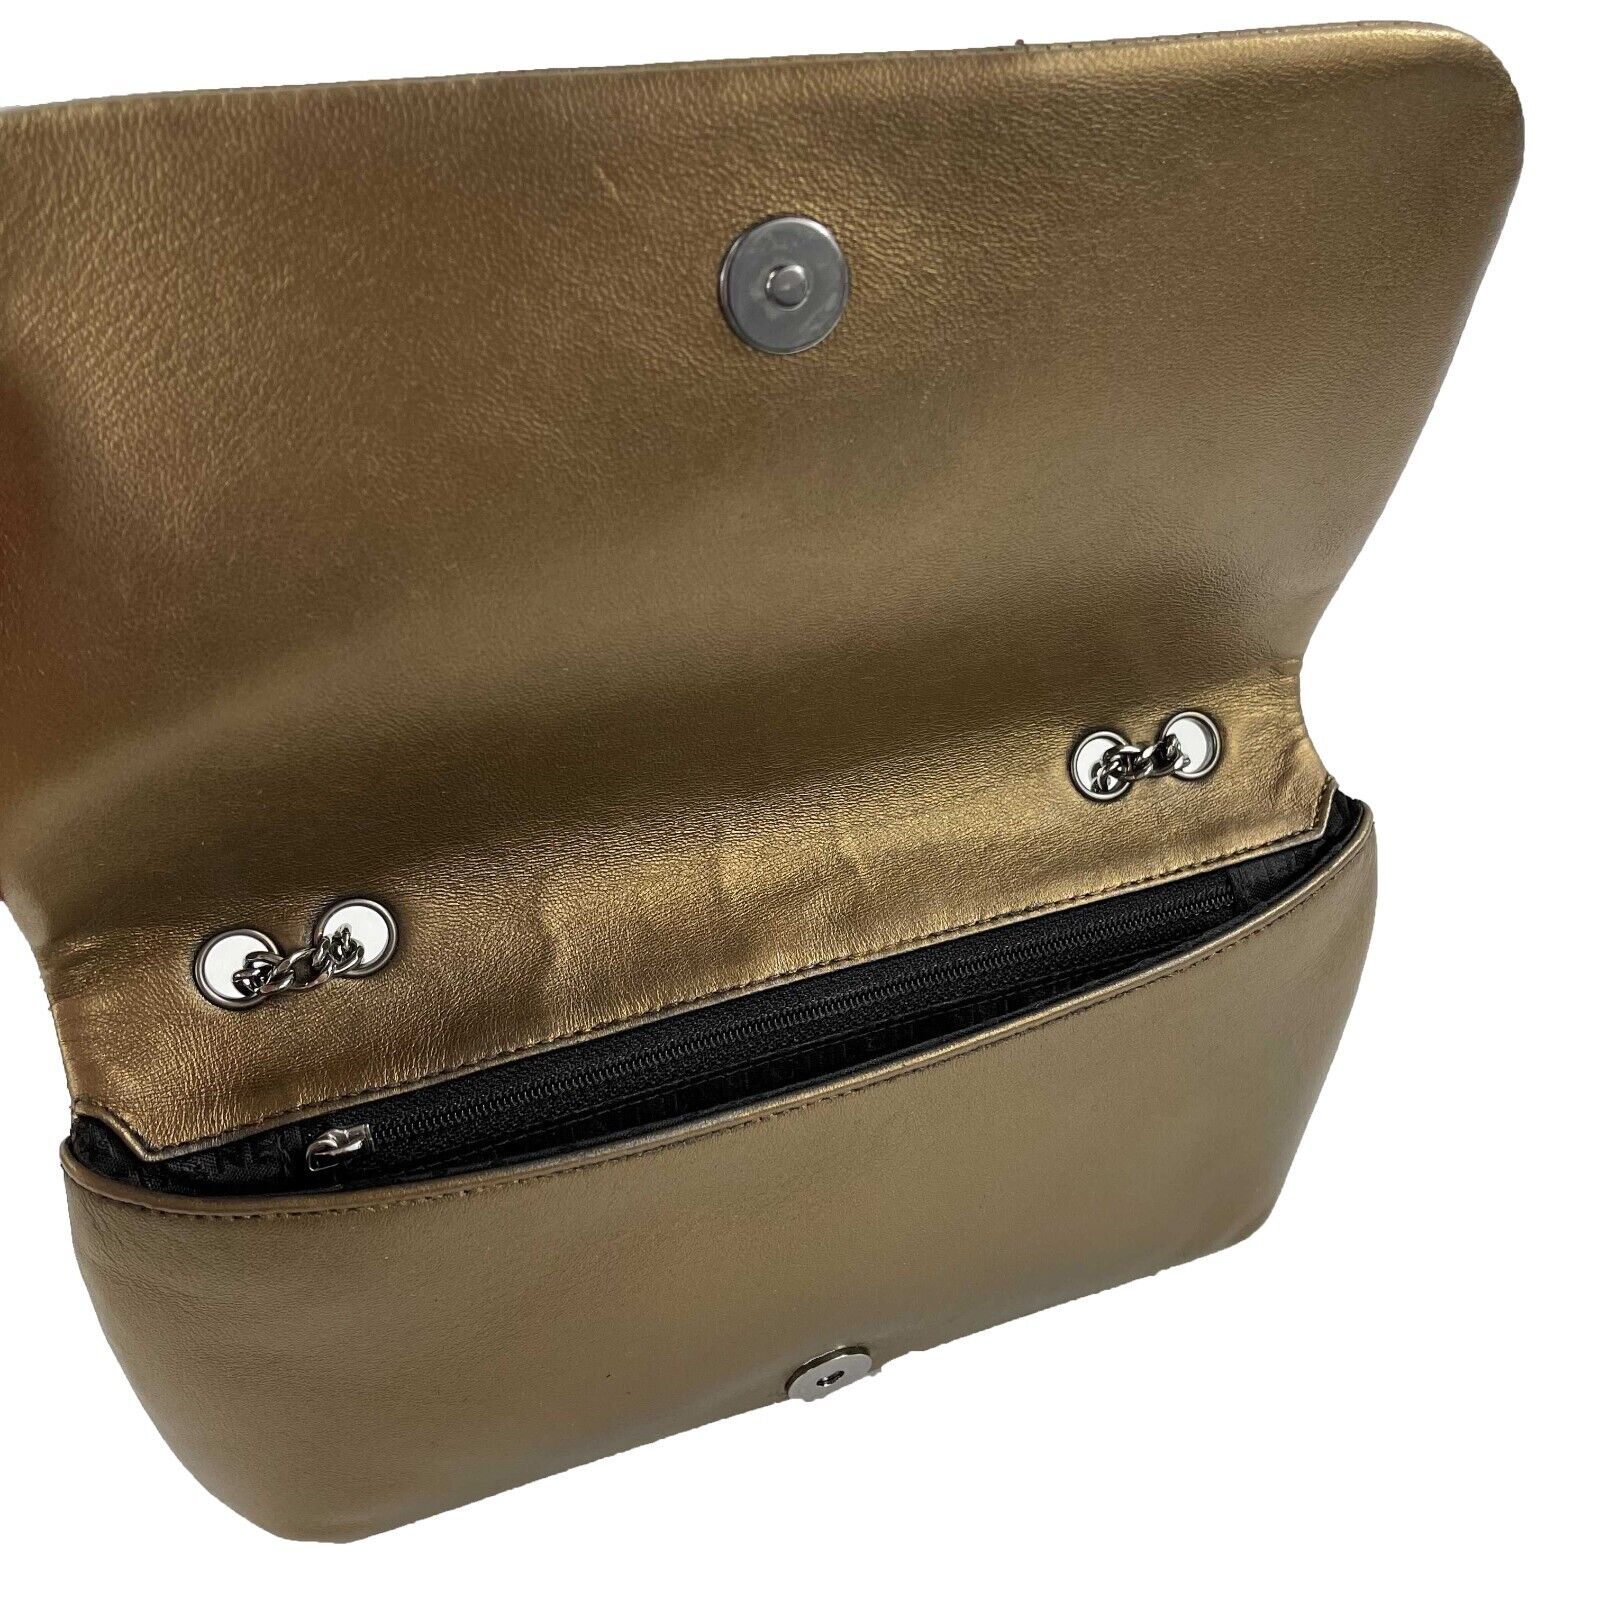 CHANEL - 2008 Rectangular Quilted Leather Full Flap Shoulder Bag